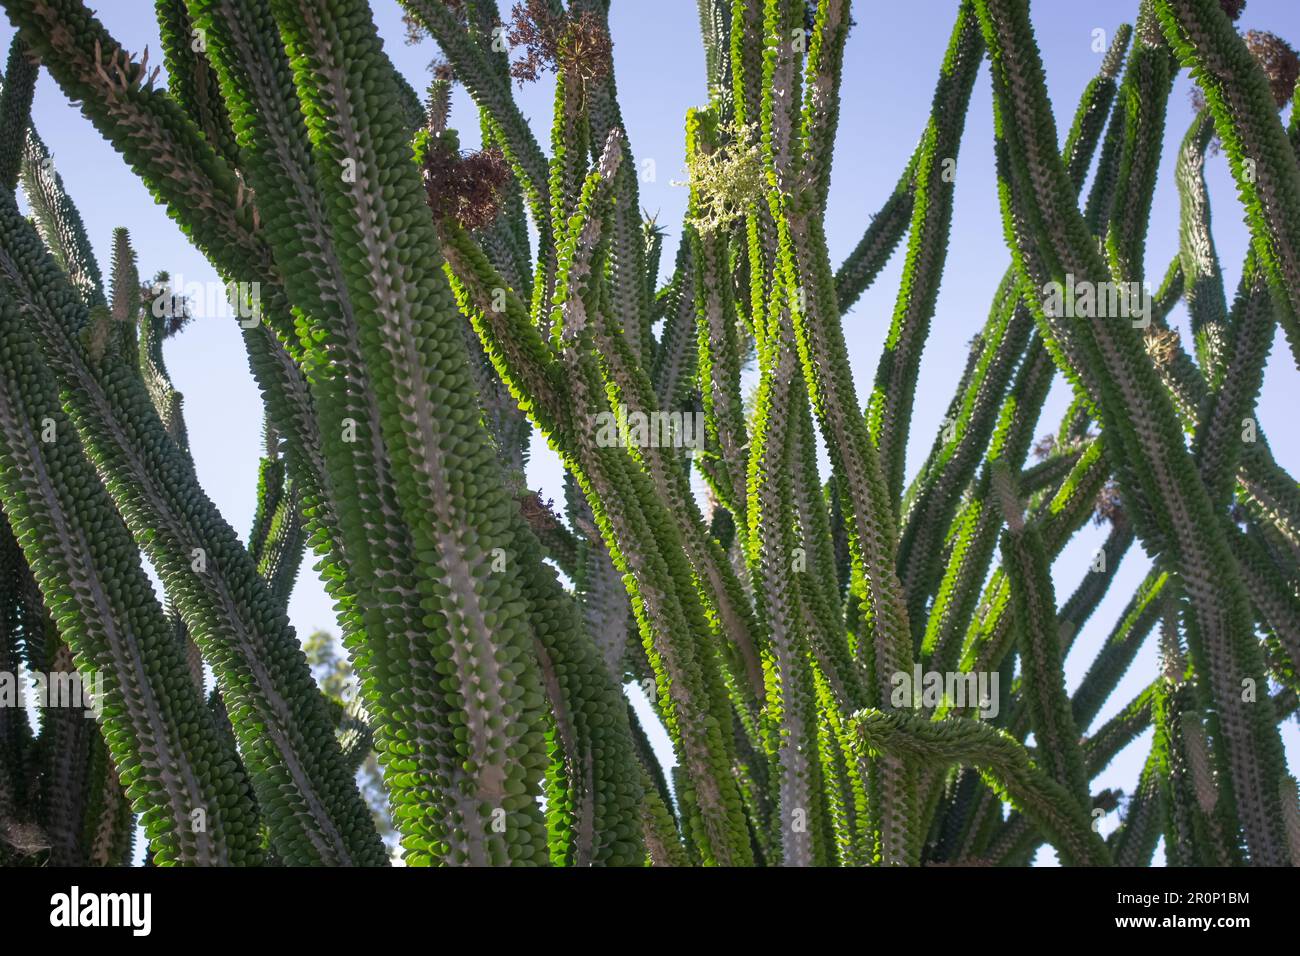 A view of a Madagascar Ocotillo plant. Stock Photo